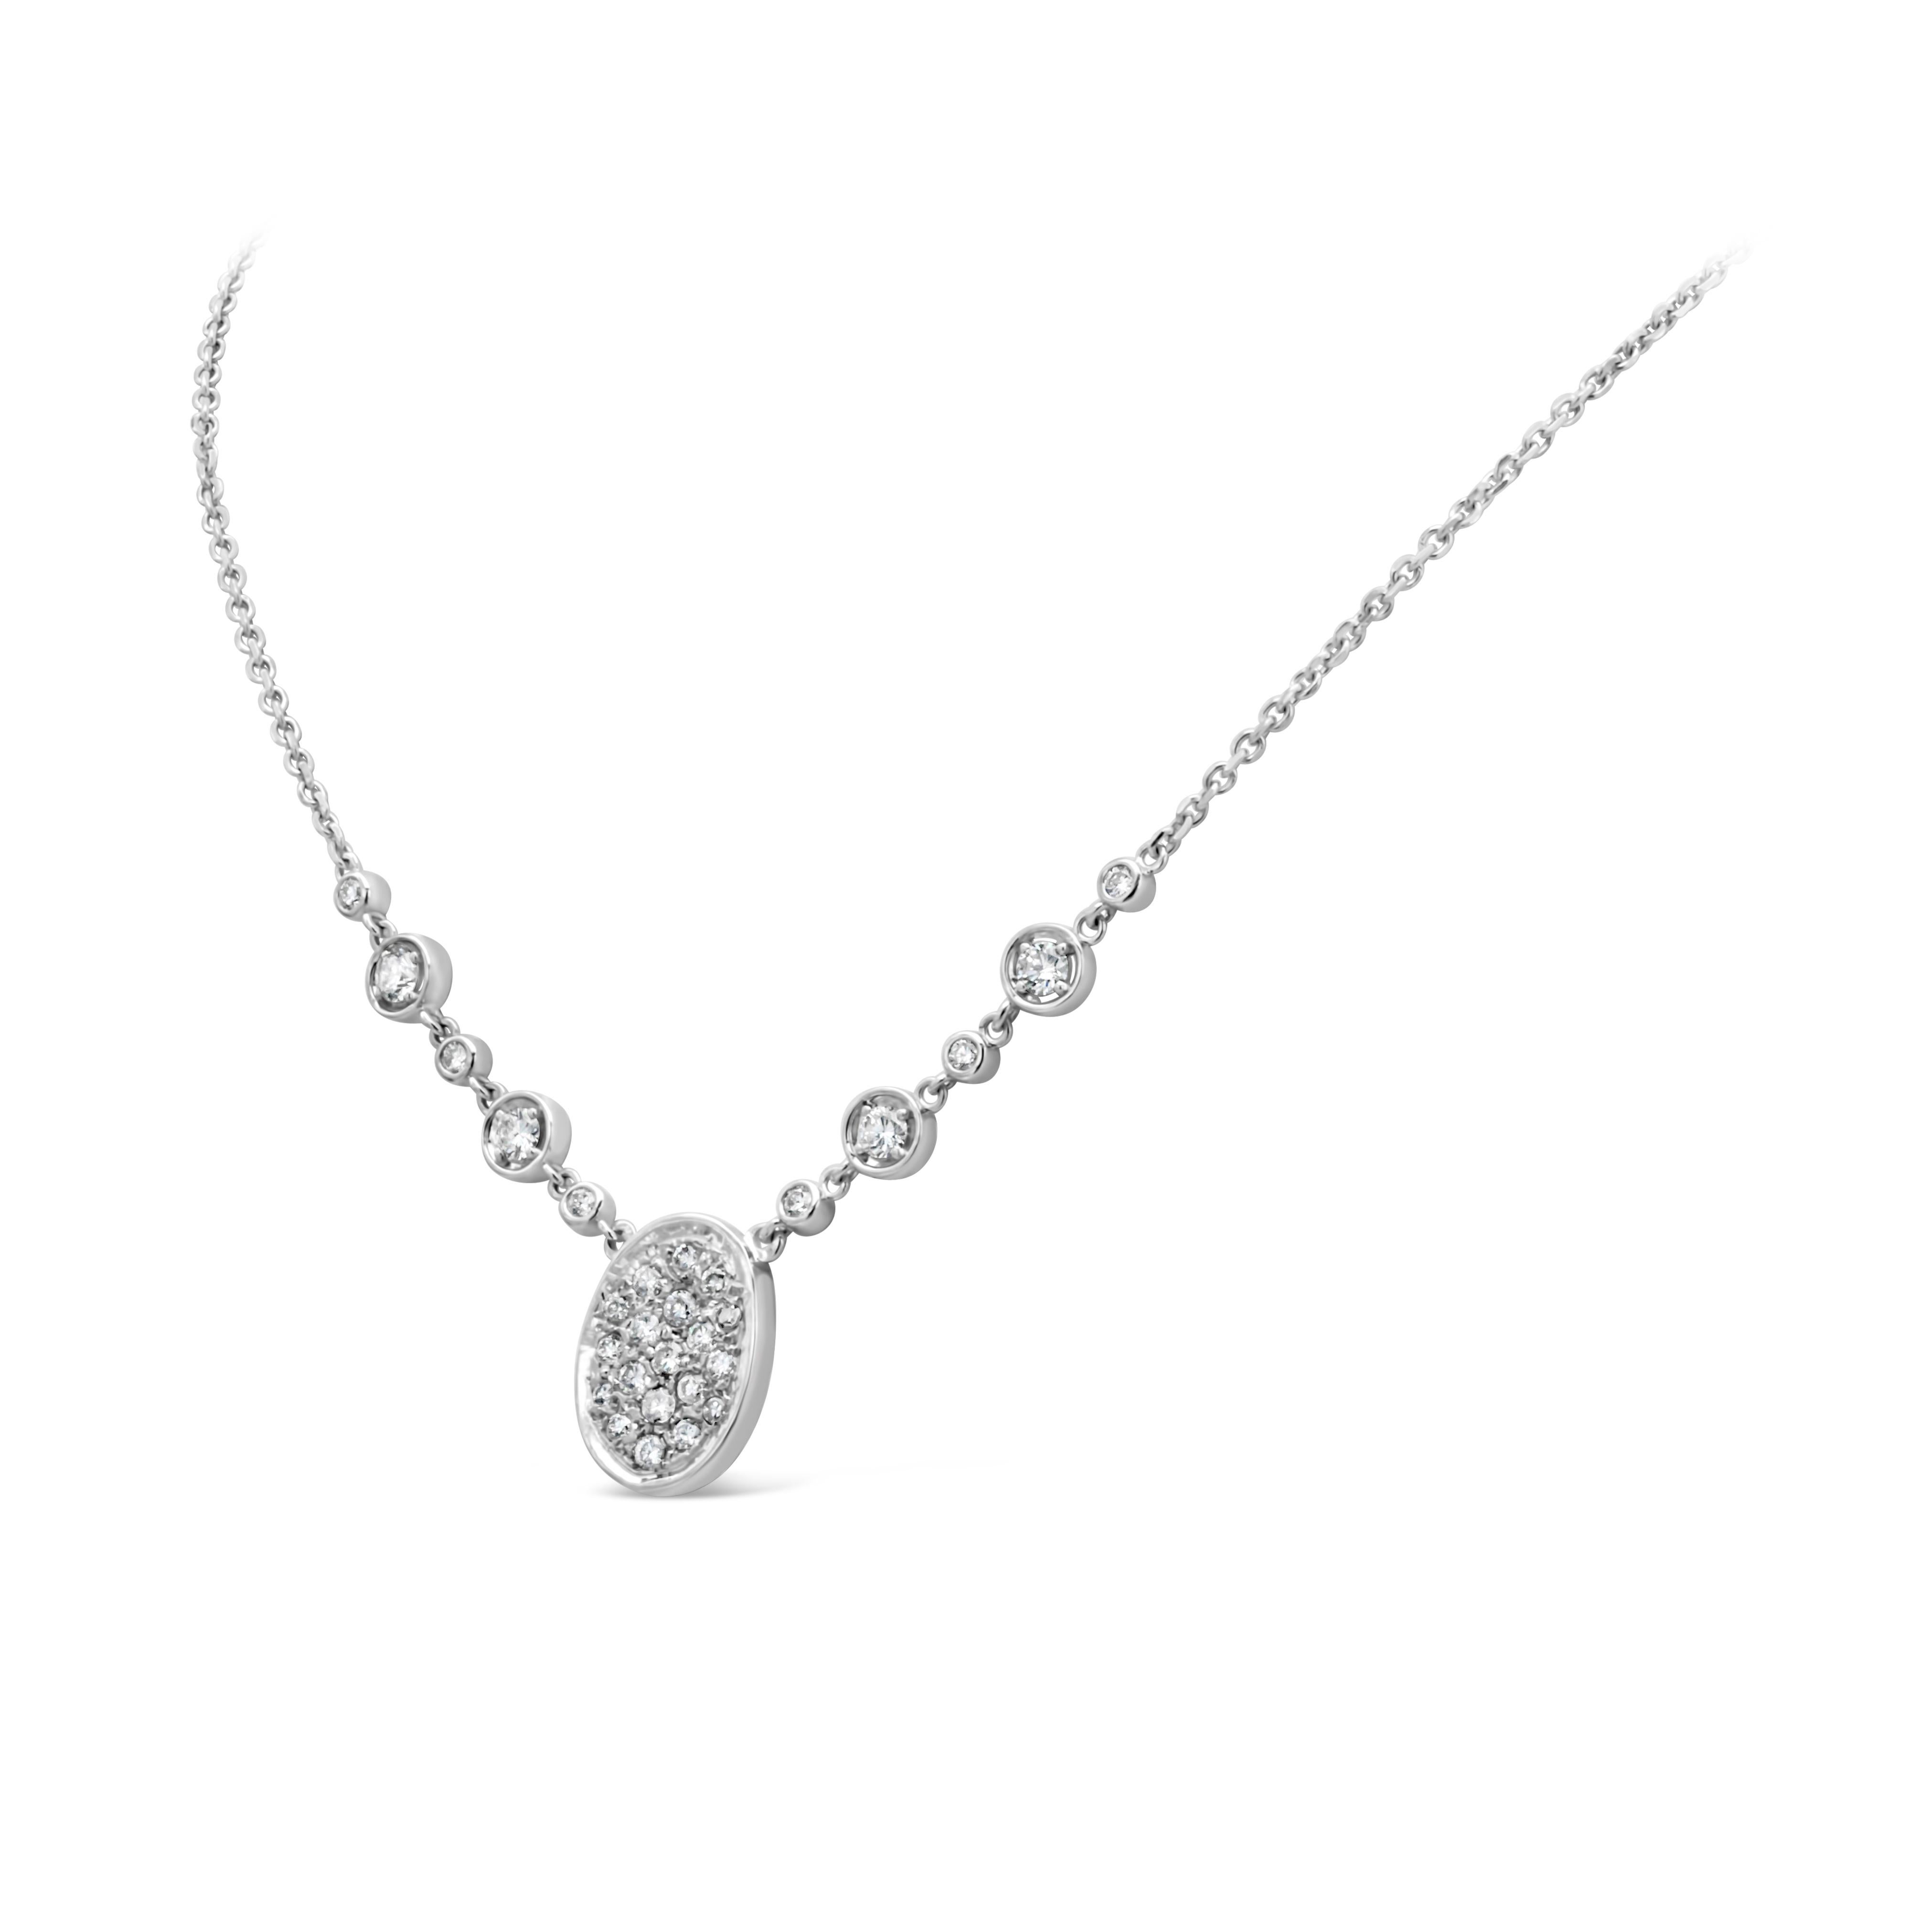 Contemporain Collier de mode avec pendentif en diamant de 1,24 carats (taille ronde) en vente